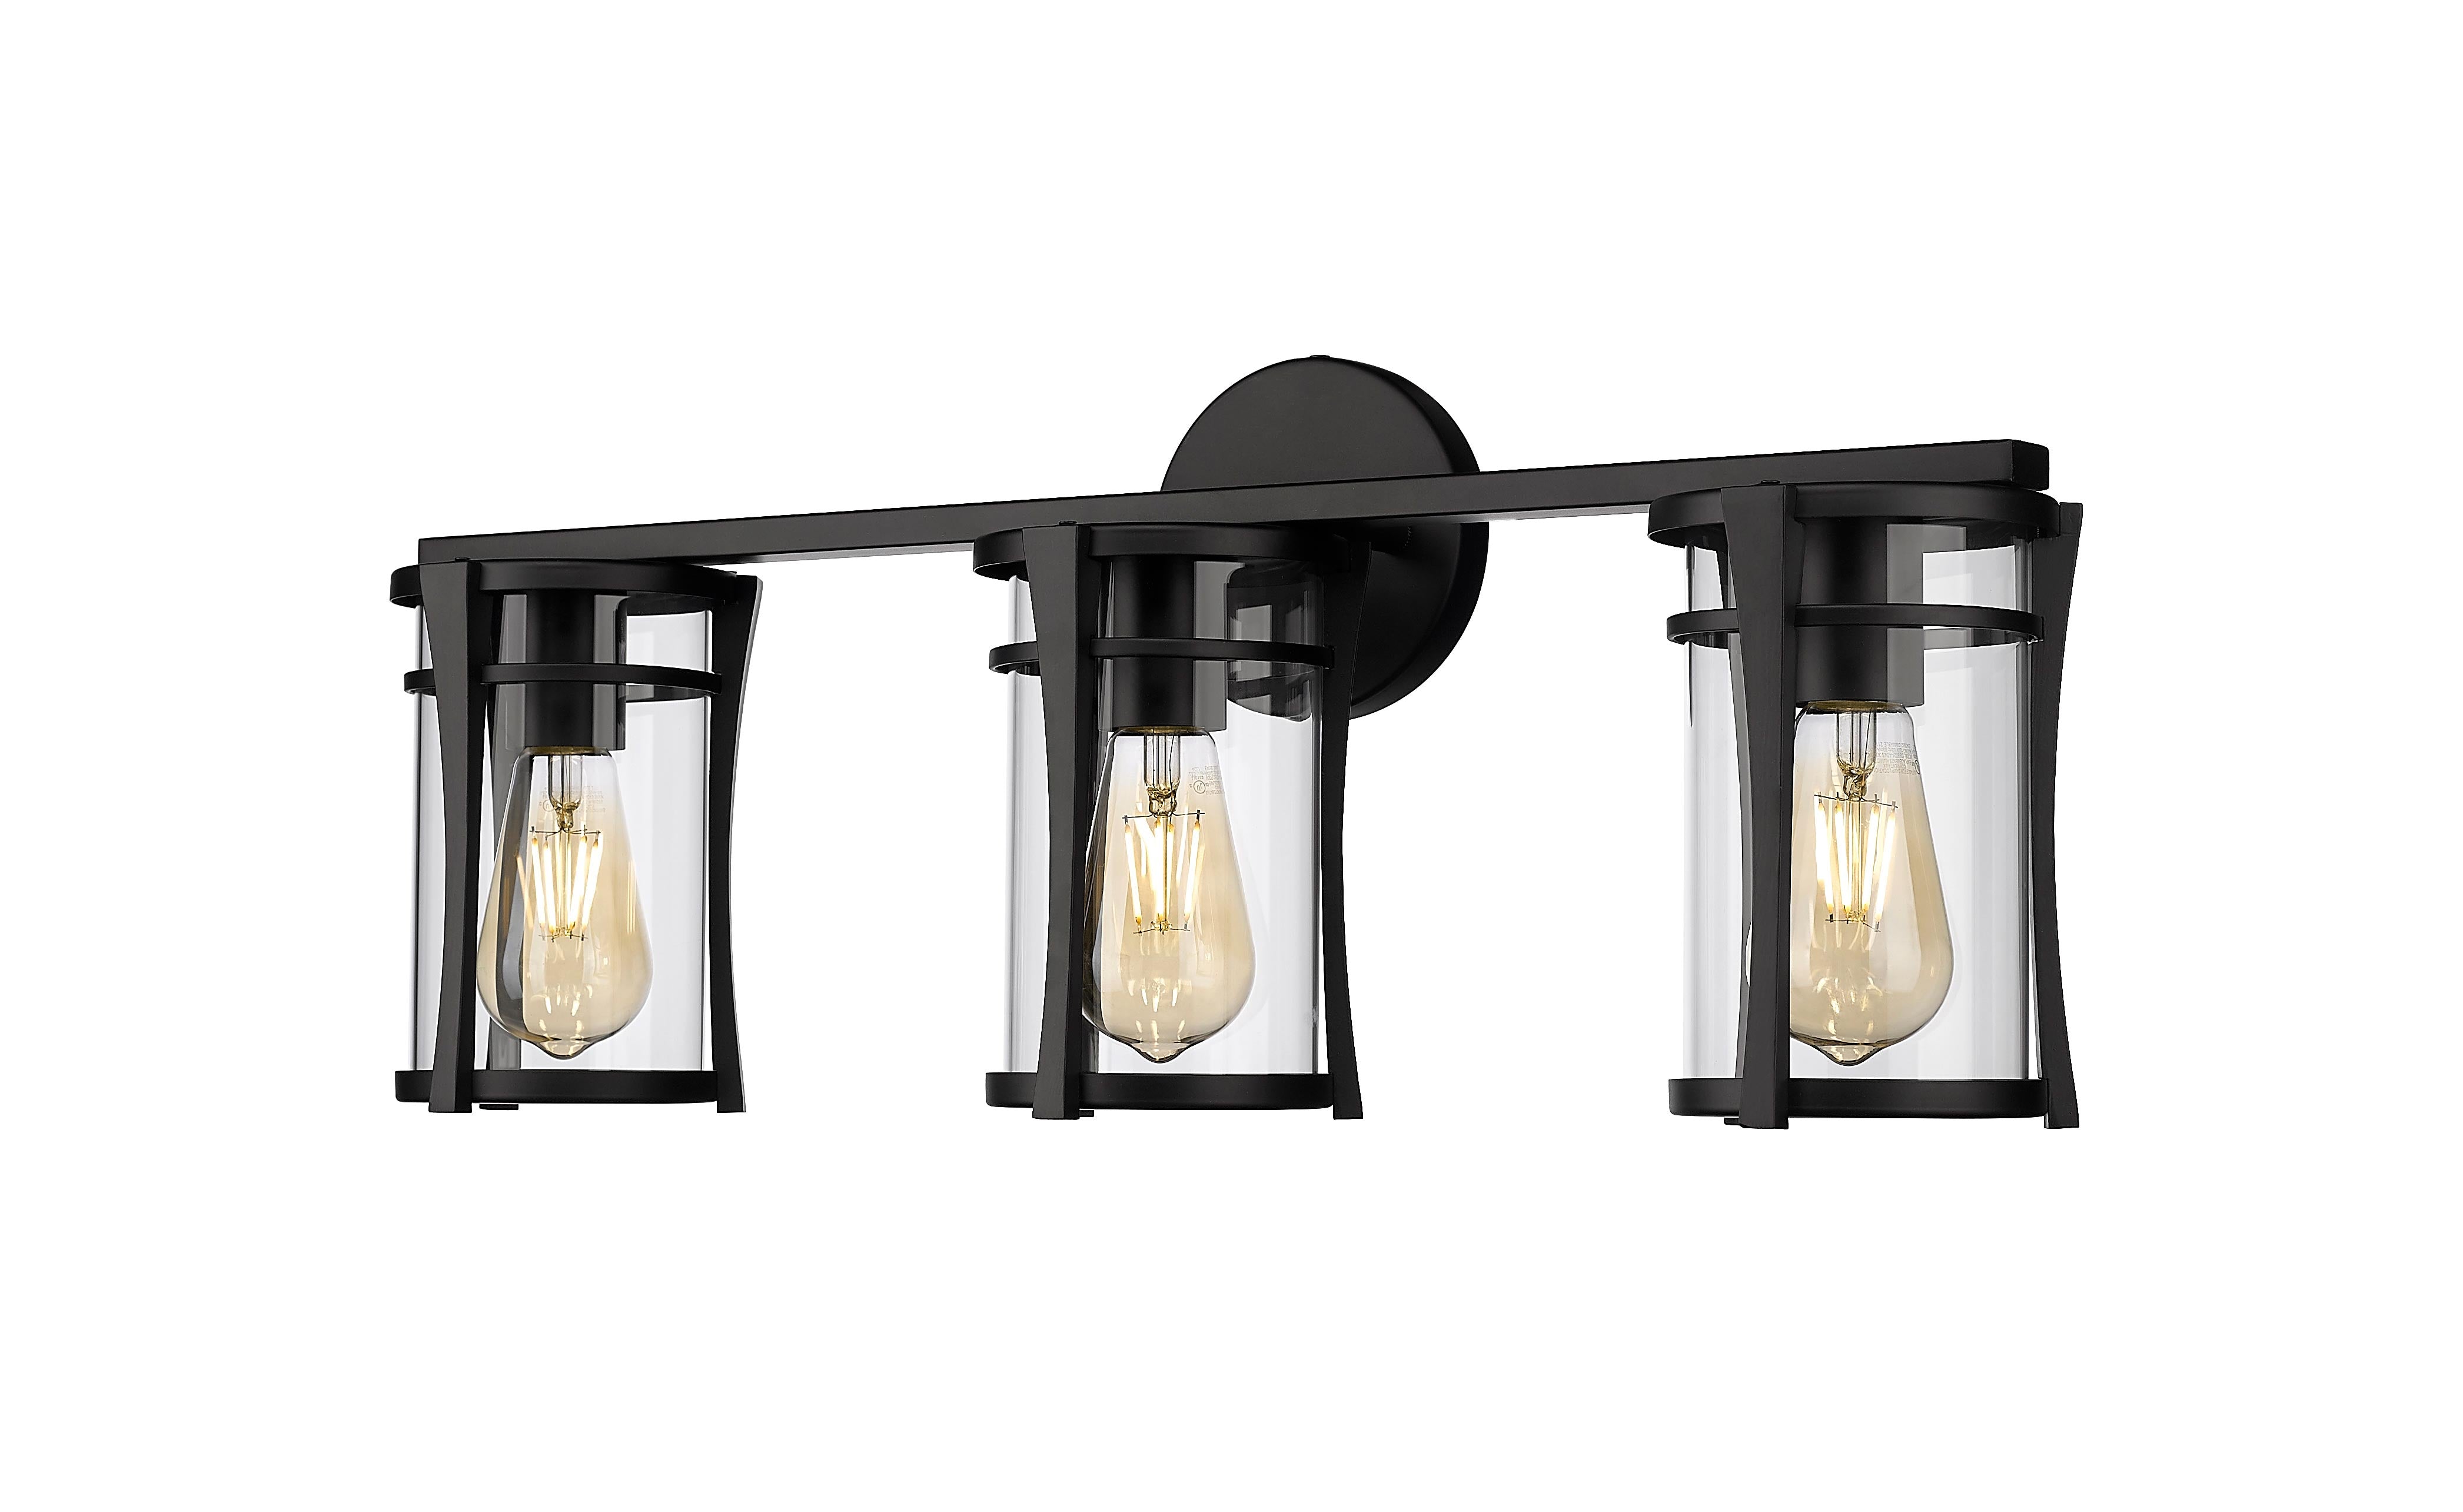 Liwuu Modern Industrial Bathroom Vanity Light Fixtures 3 Lights